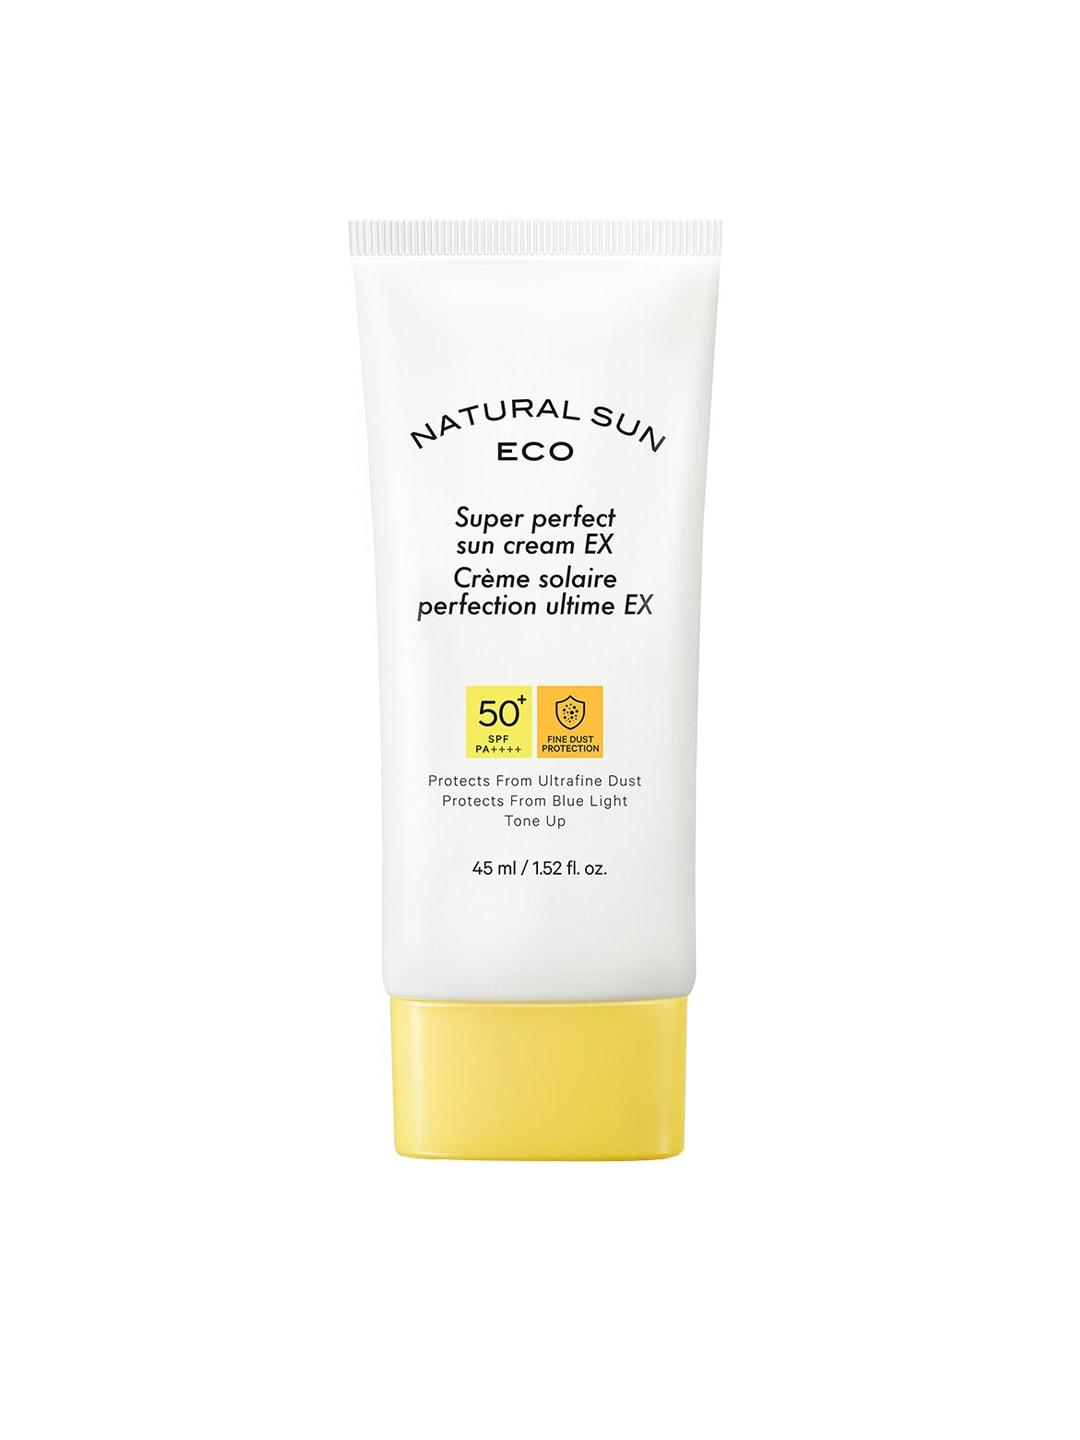 The Face Shop Unisex Natural Sun Eco Super Perfect Sun Cream EX 45 ml